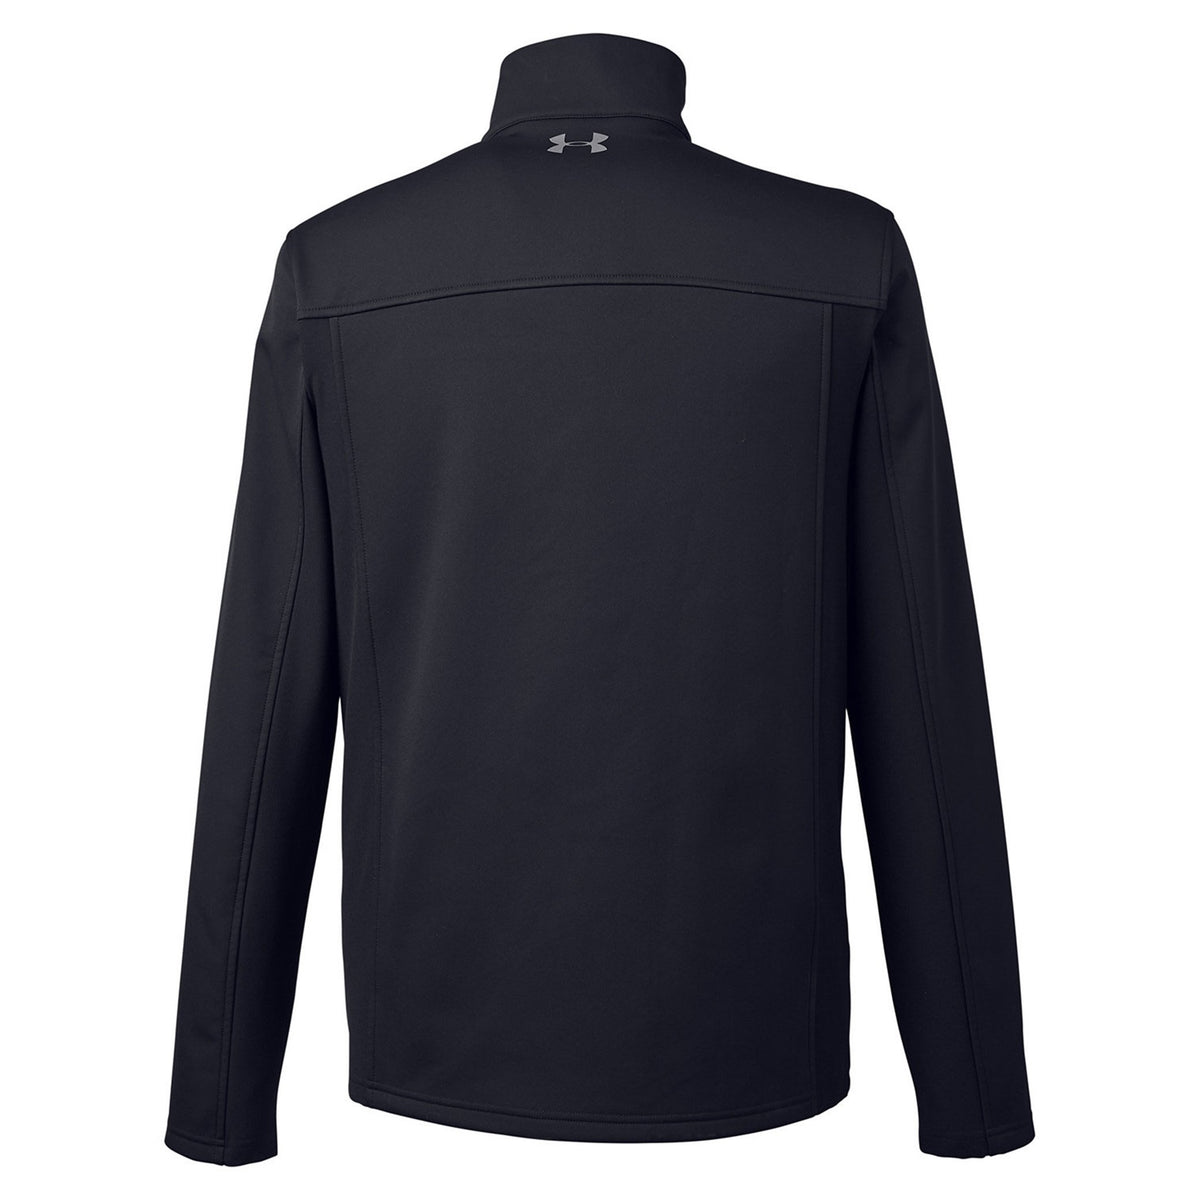 UNDER ARMOUR MENS ColdGear Infrared Shield Jacket Coat Adults Windbreaker  £60.00 - PicClick UK